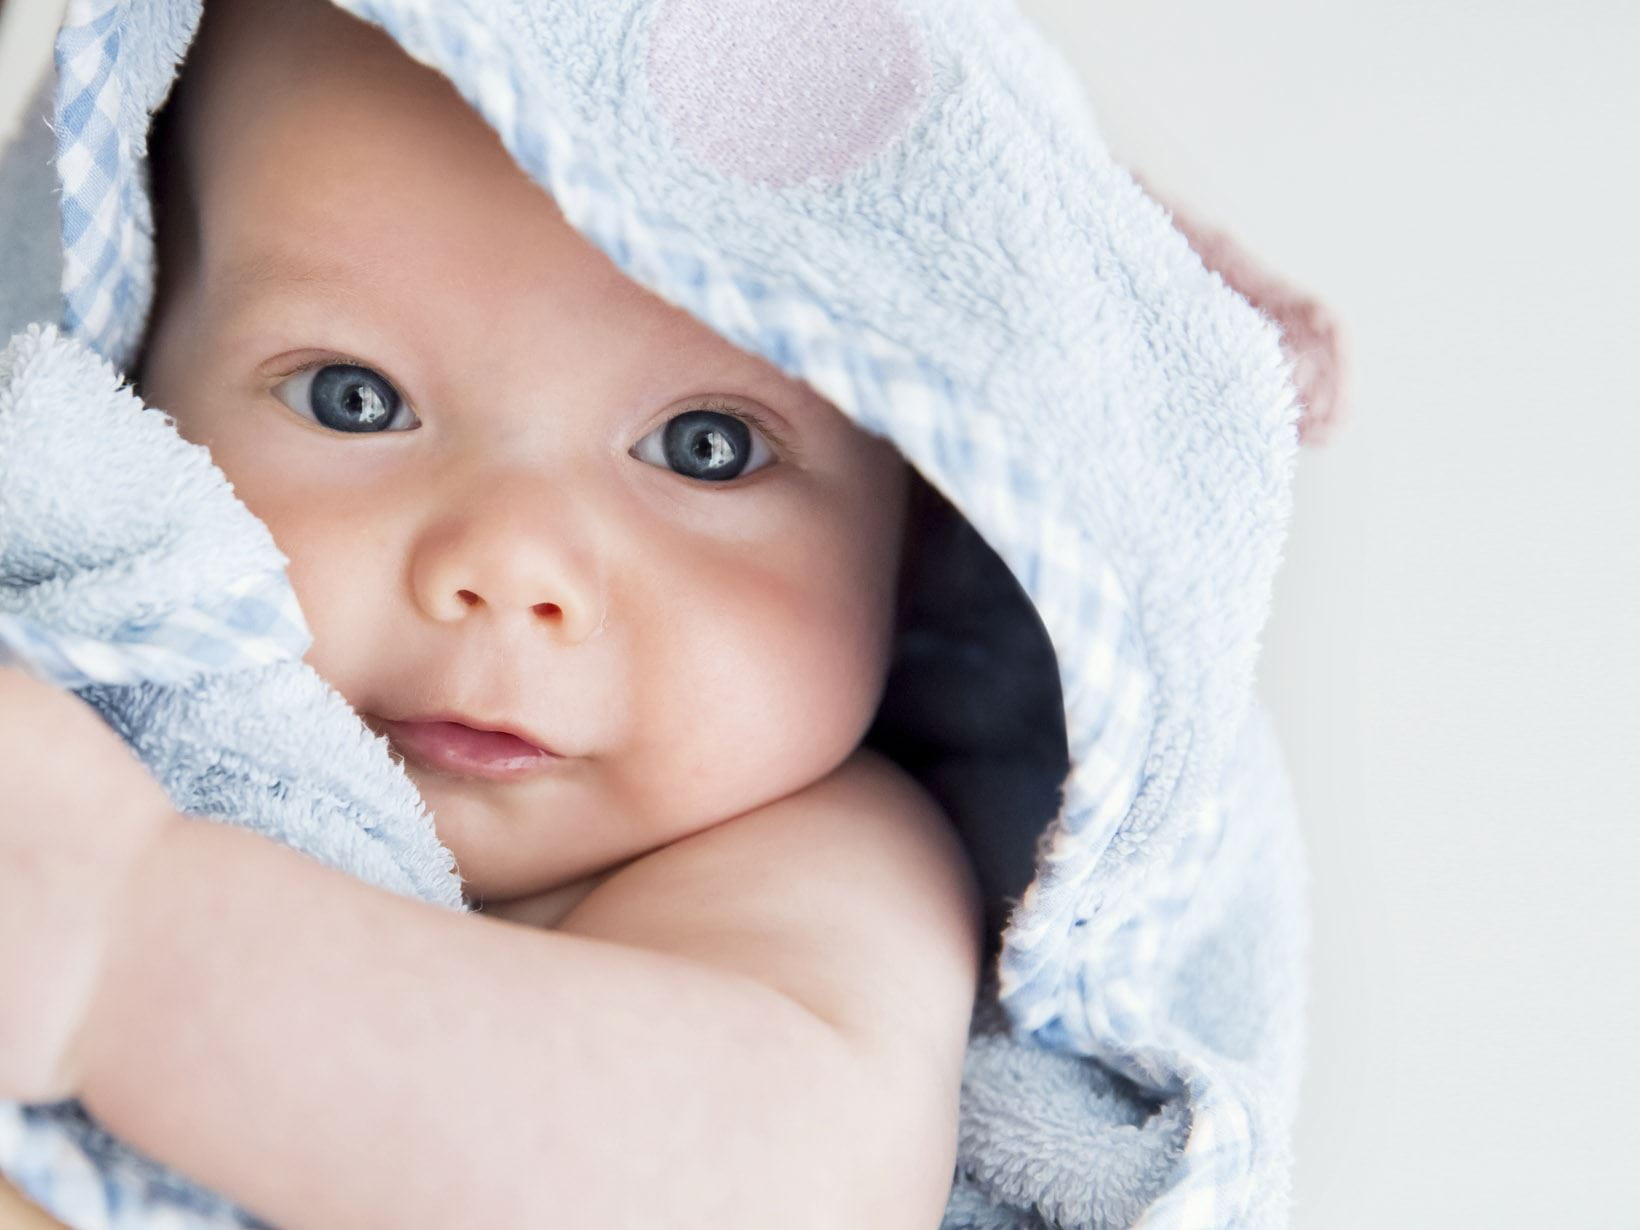 NIVEA: Babyakne – was hilft bei Pusteln?